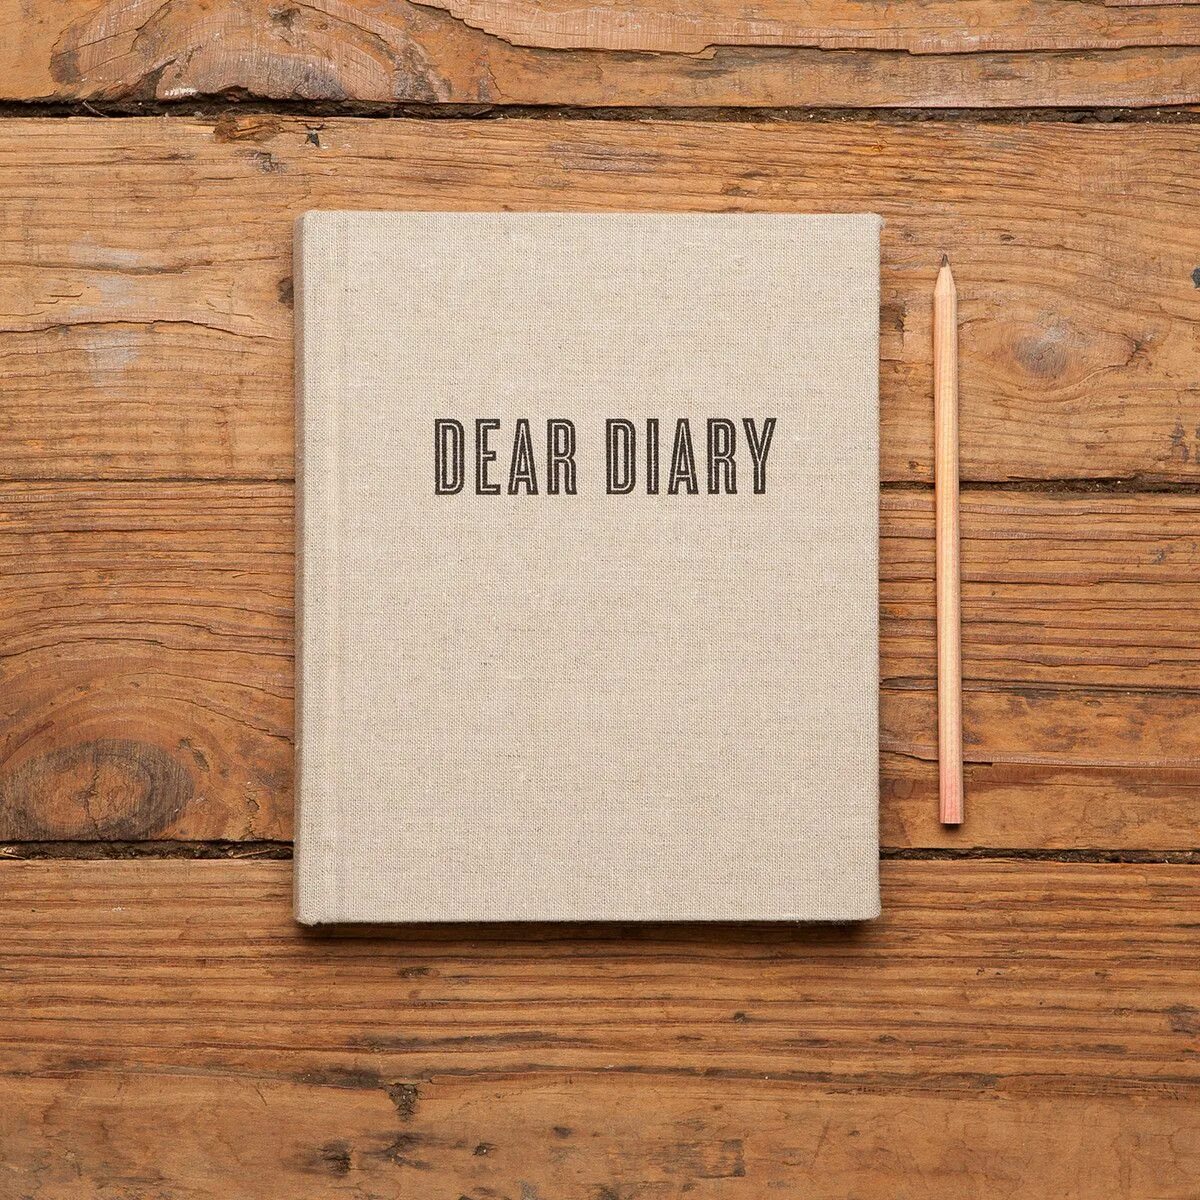 Keeping diaries. Dear Diary. Dear Diary ежедневник. Dairy дневник. Дорогой дневник надпись.